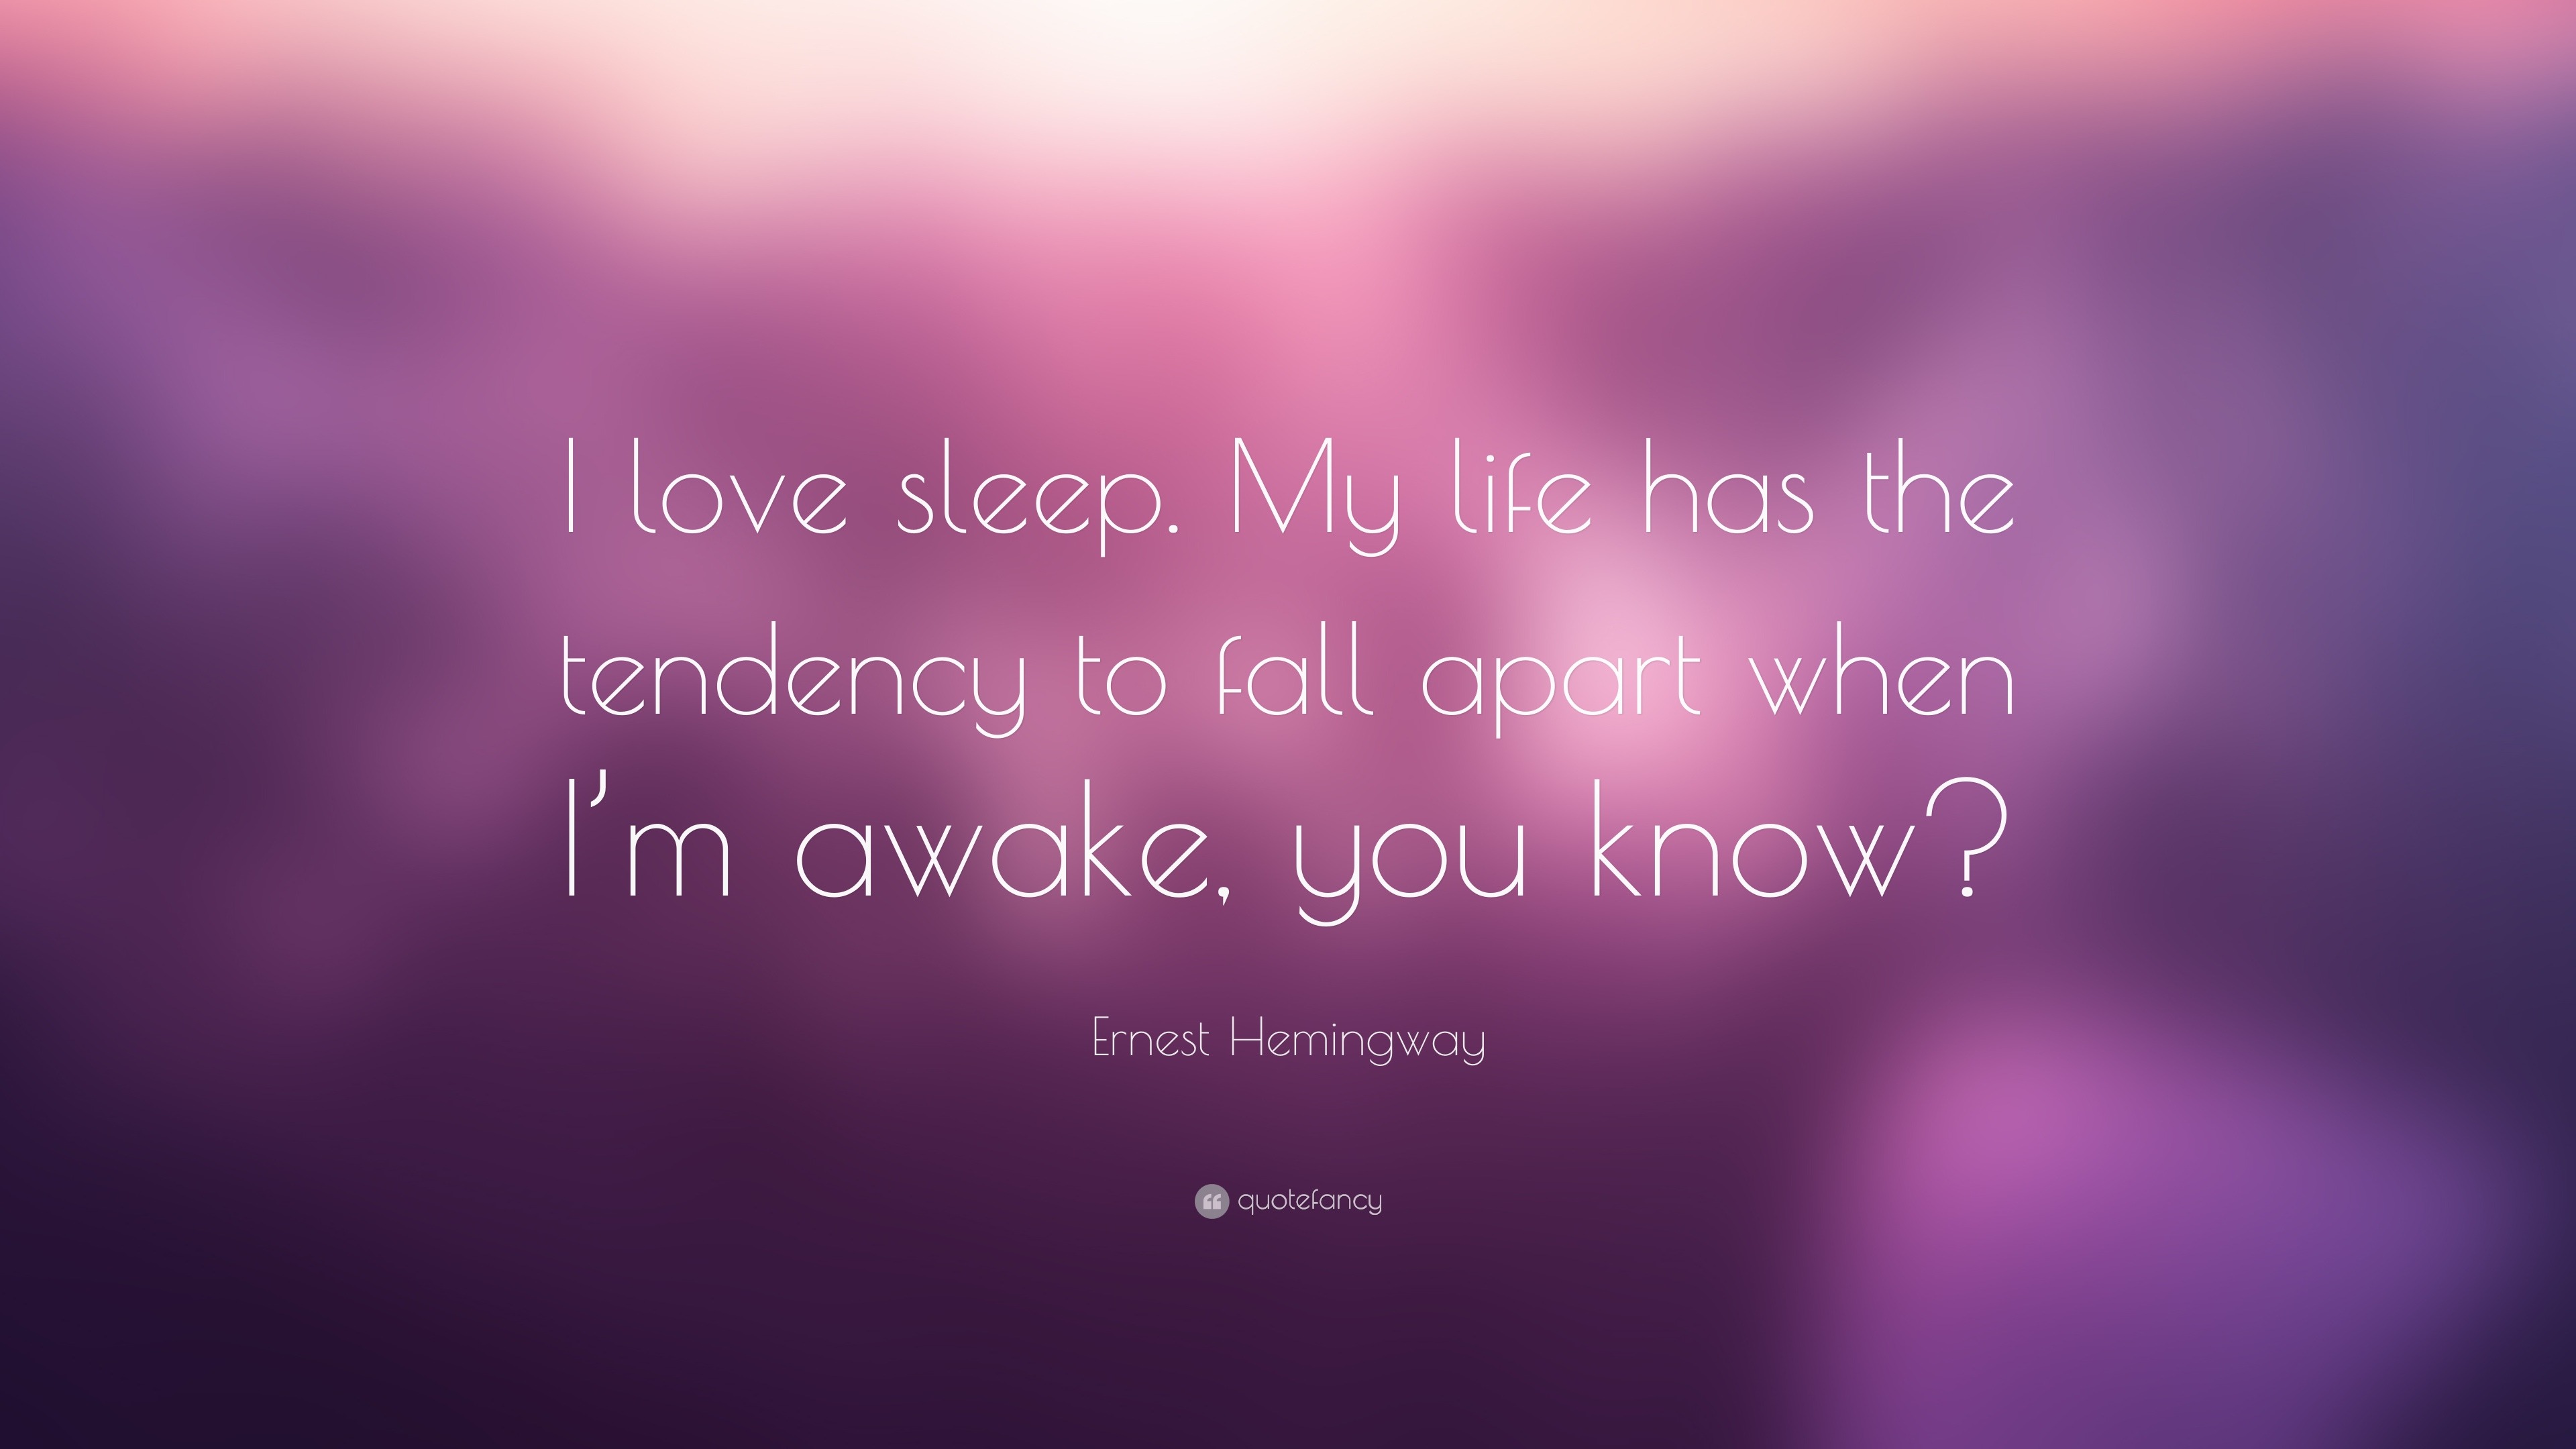 Ernest Hemingway - I love sleep. My life has the tendency